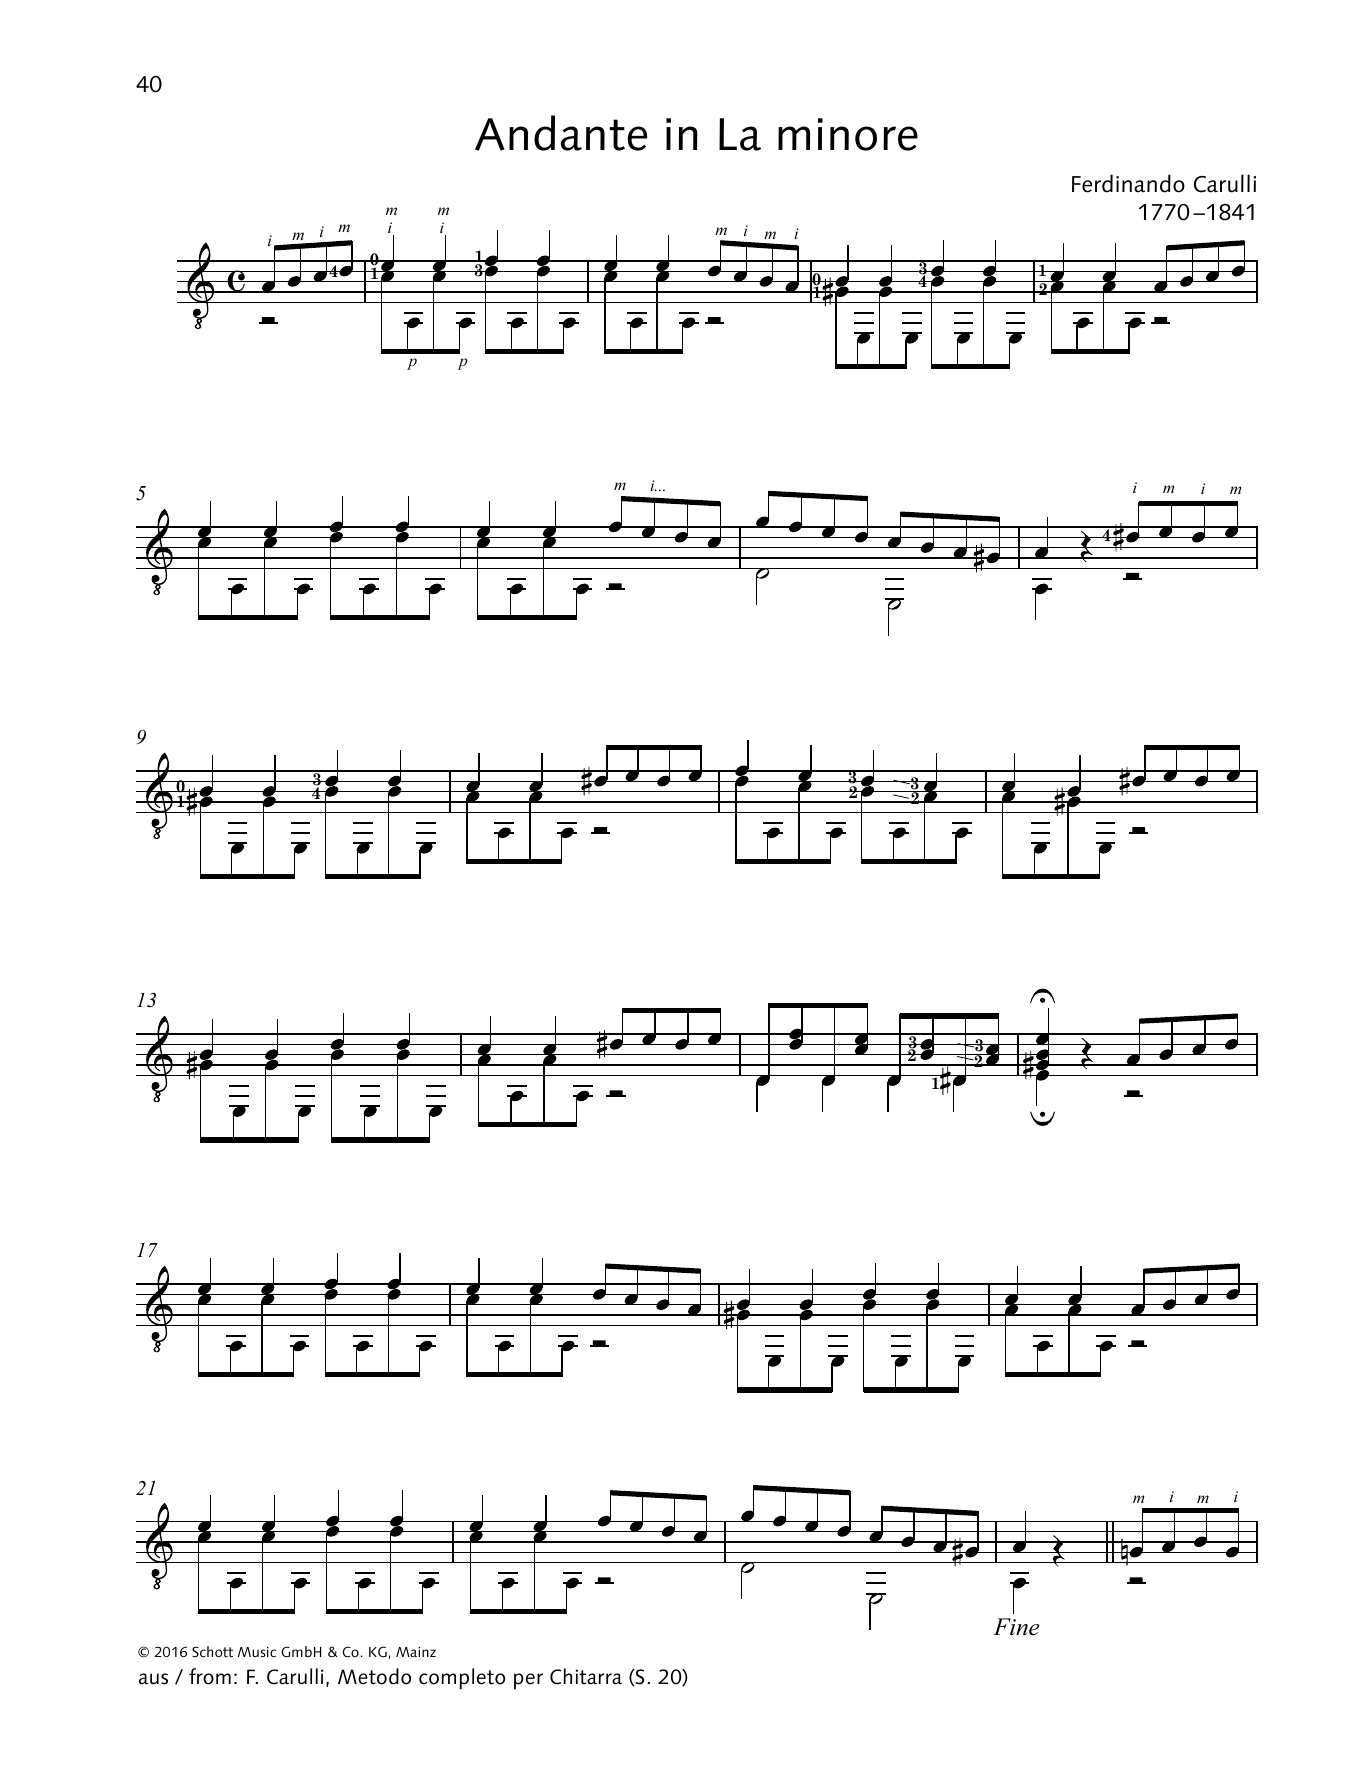 Download Ferdinando Carulli Andante in La minore Sheet Music and learn how to play Solo Guitar PDF digital score in minutes